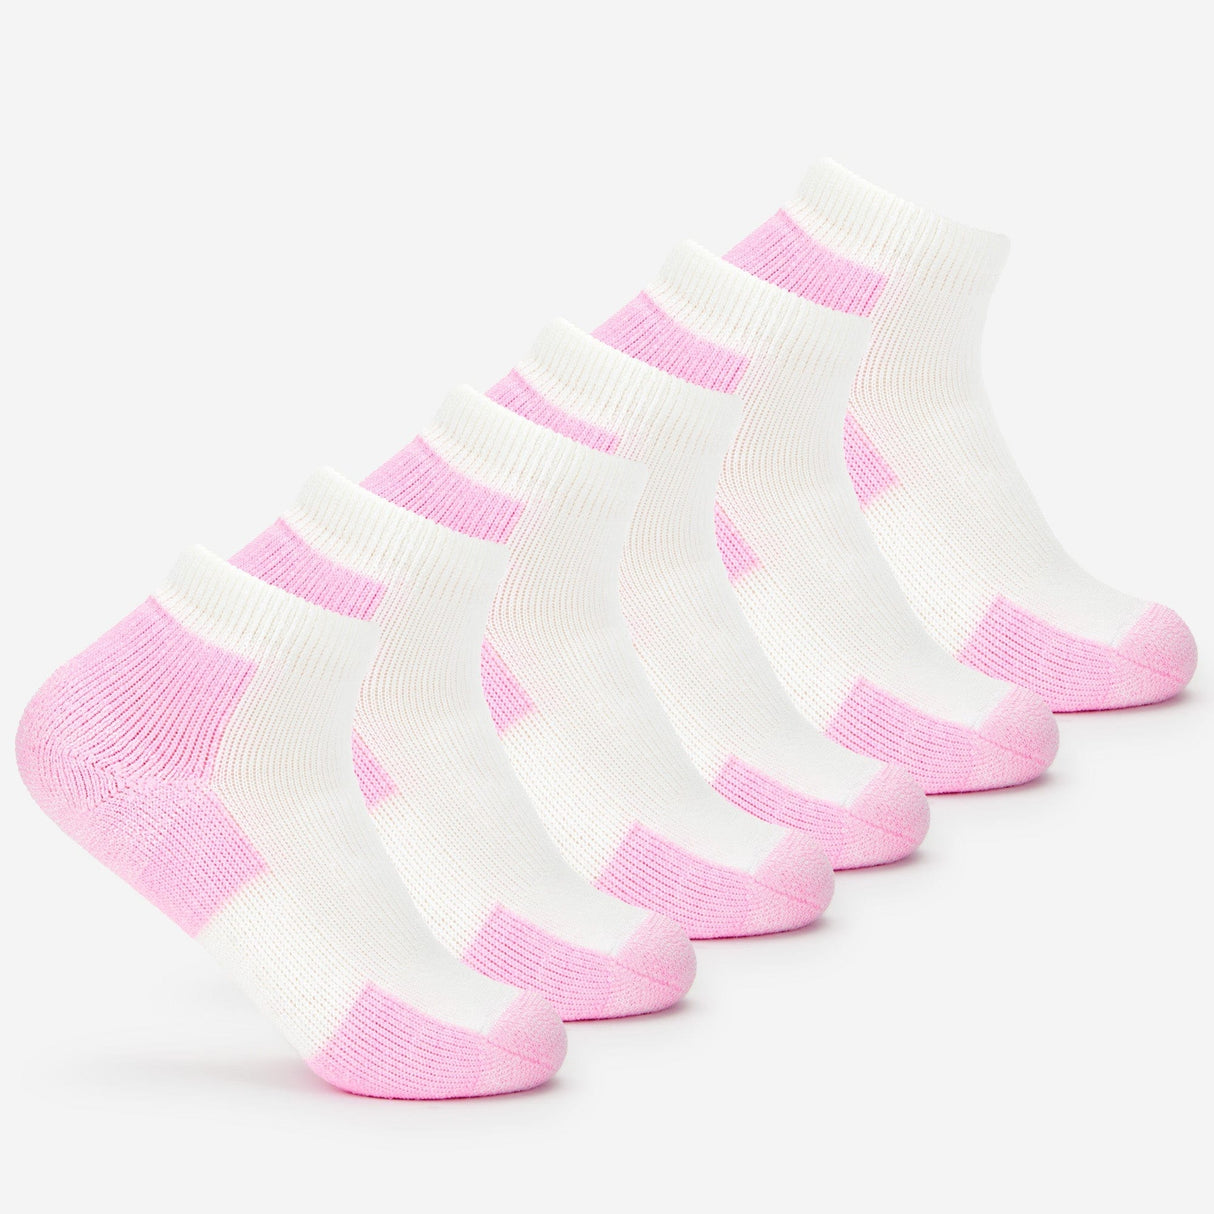 Thorlo Womens Distance Walking Maximum Cushion Ankle Socks  -  Small / Pink / 6-Pair Pack